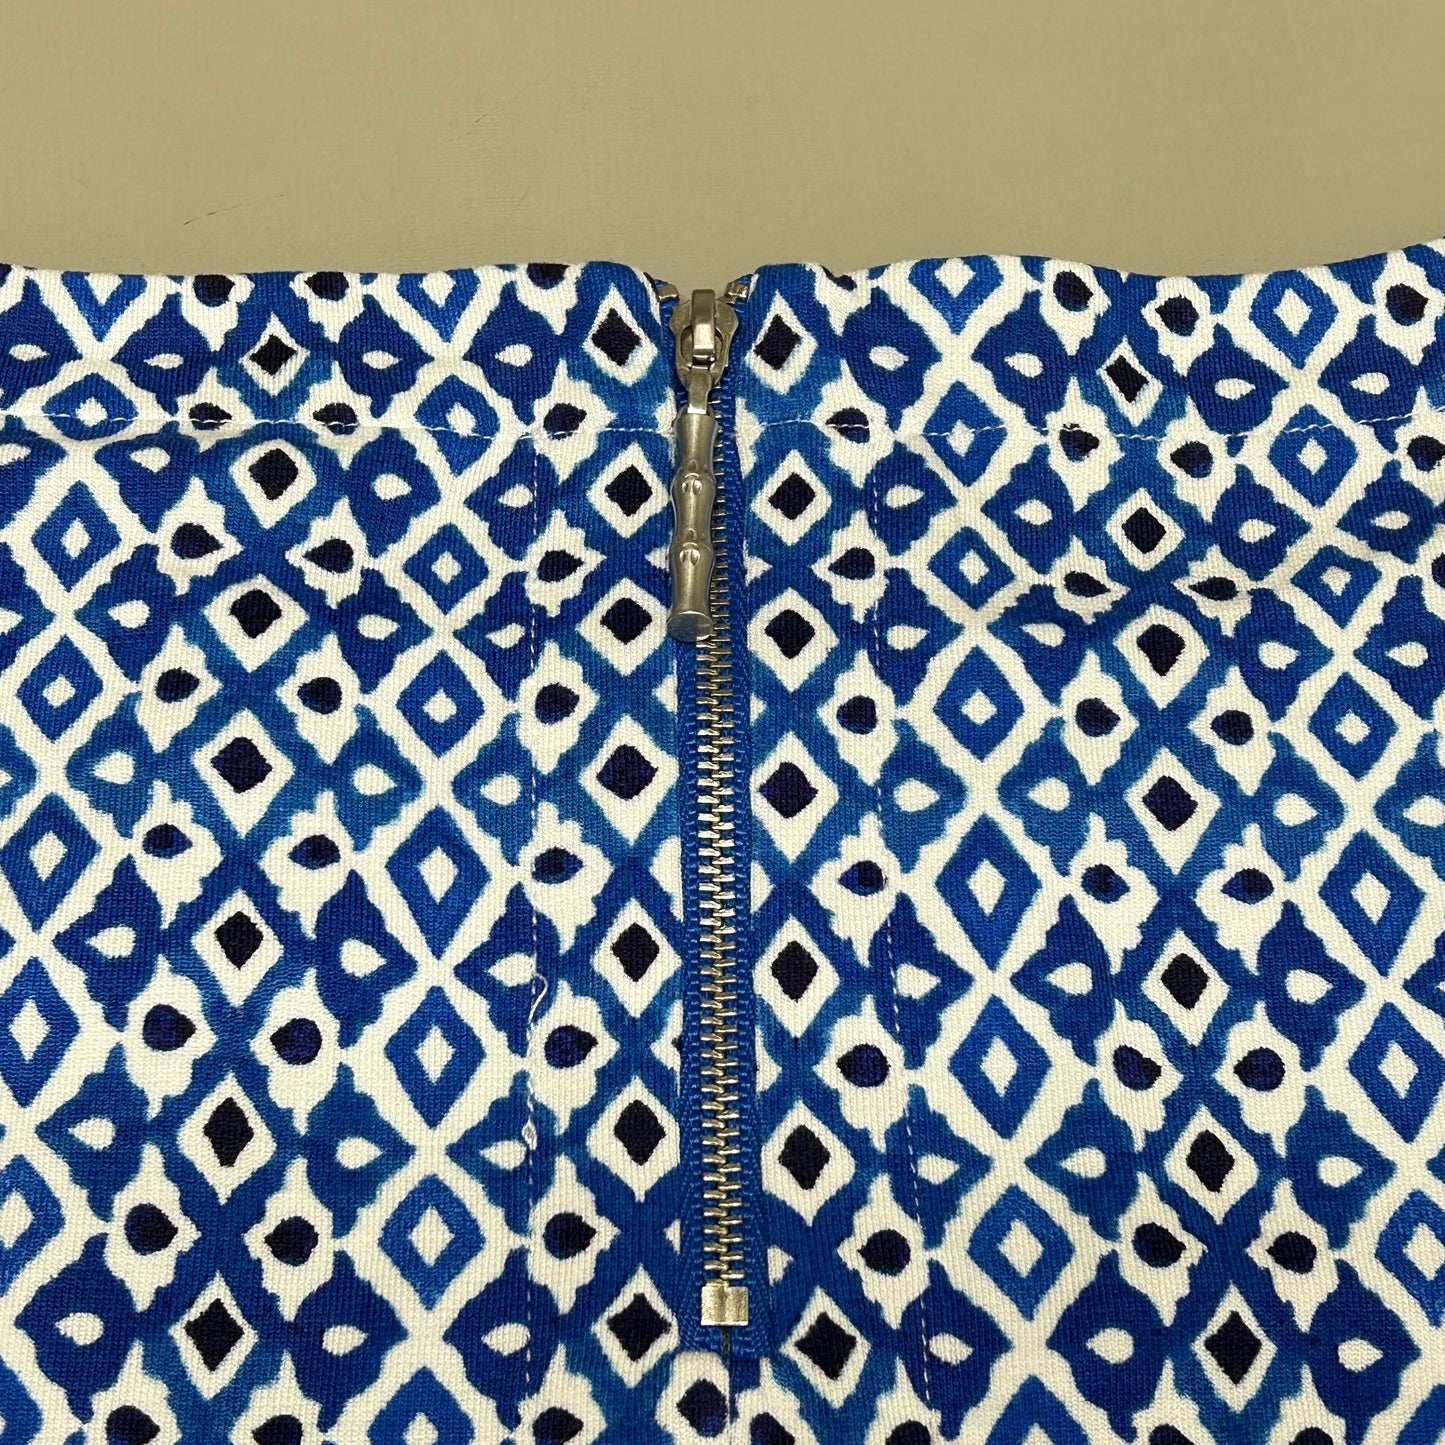 TOMMY BAHAMA Women's Tenali Tiles Short Dress Blue/White Size XL (New)